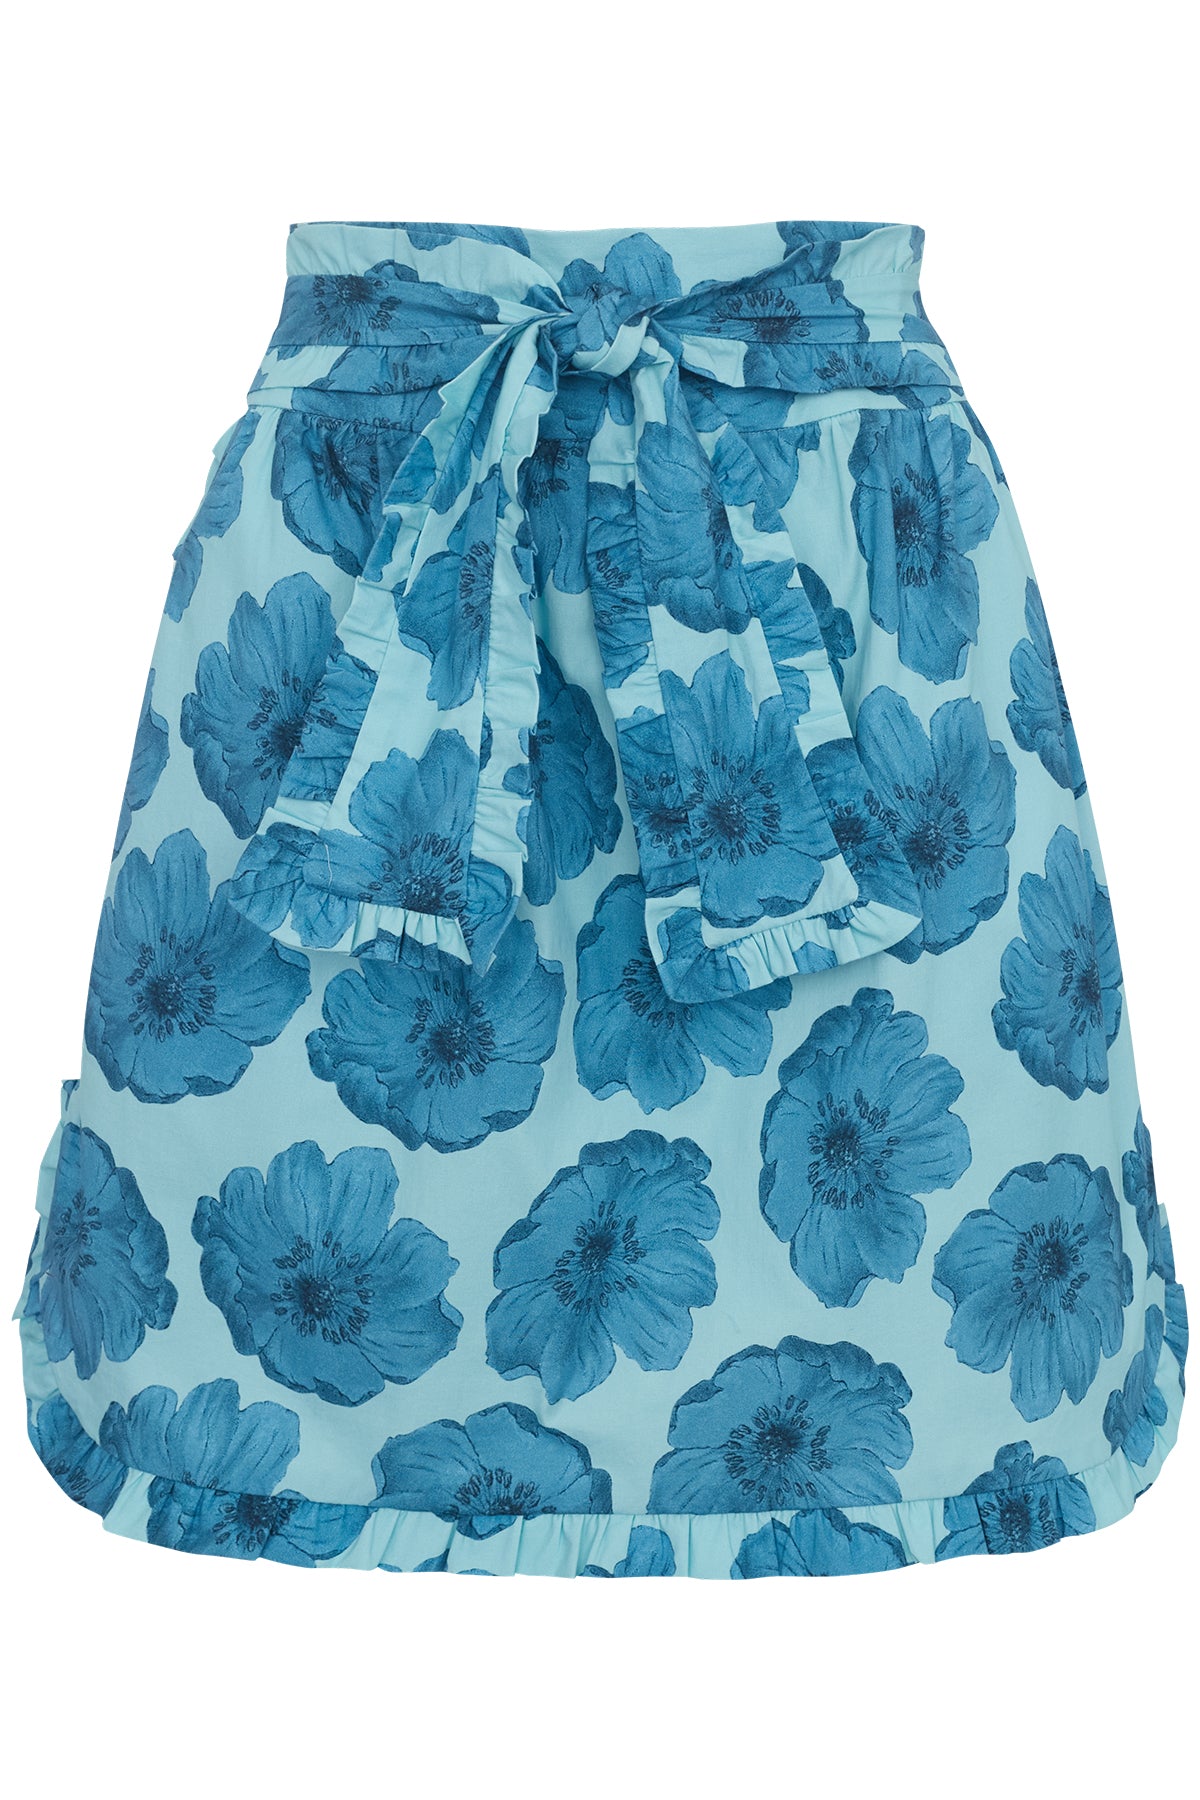 Floral Classic Ruffled Short Skirt